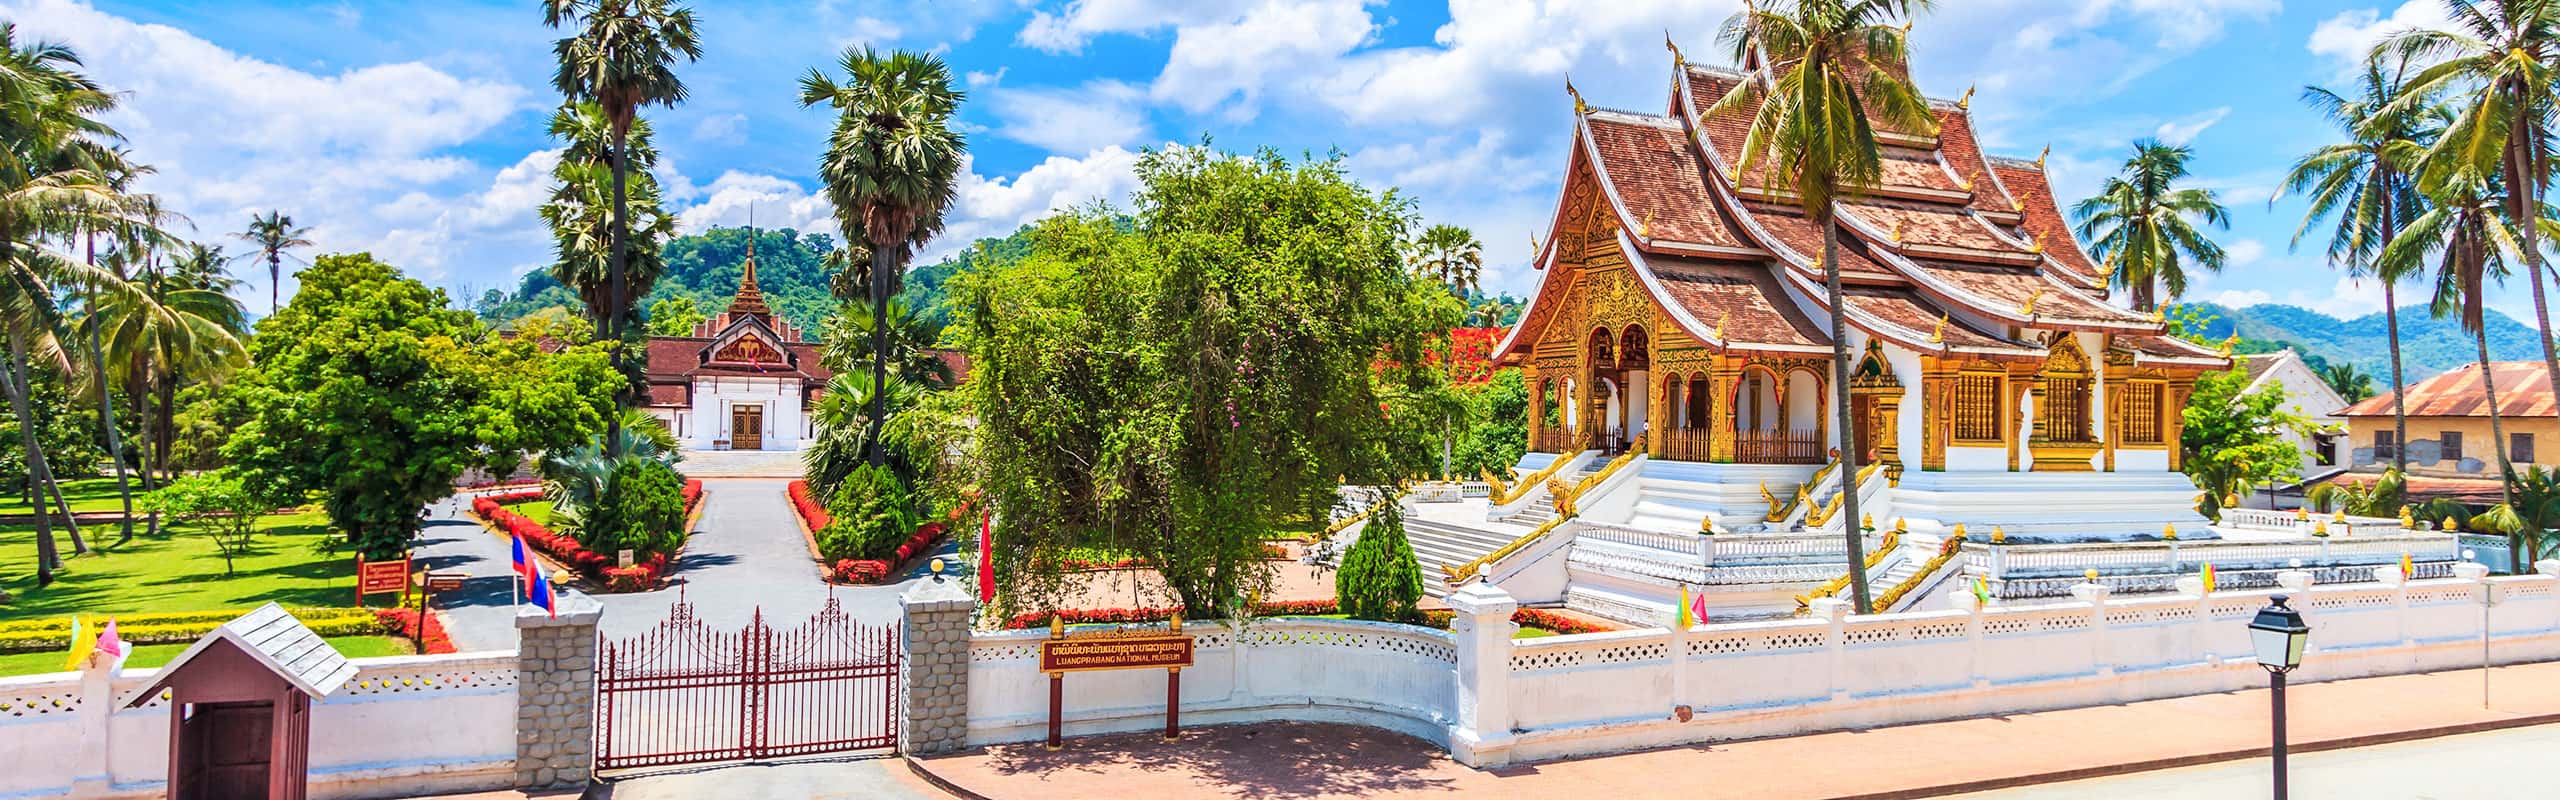 Royal Palace Museum, Luang Prabang